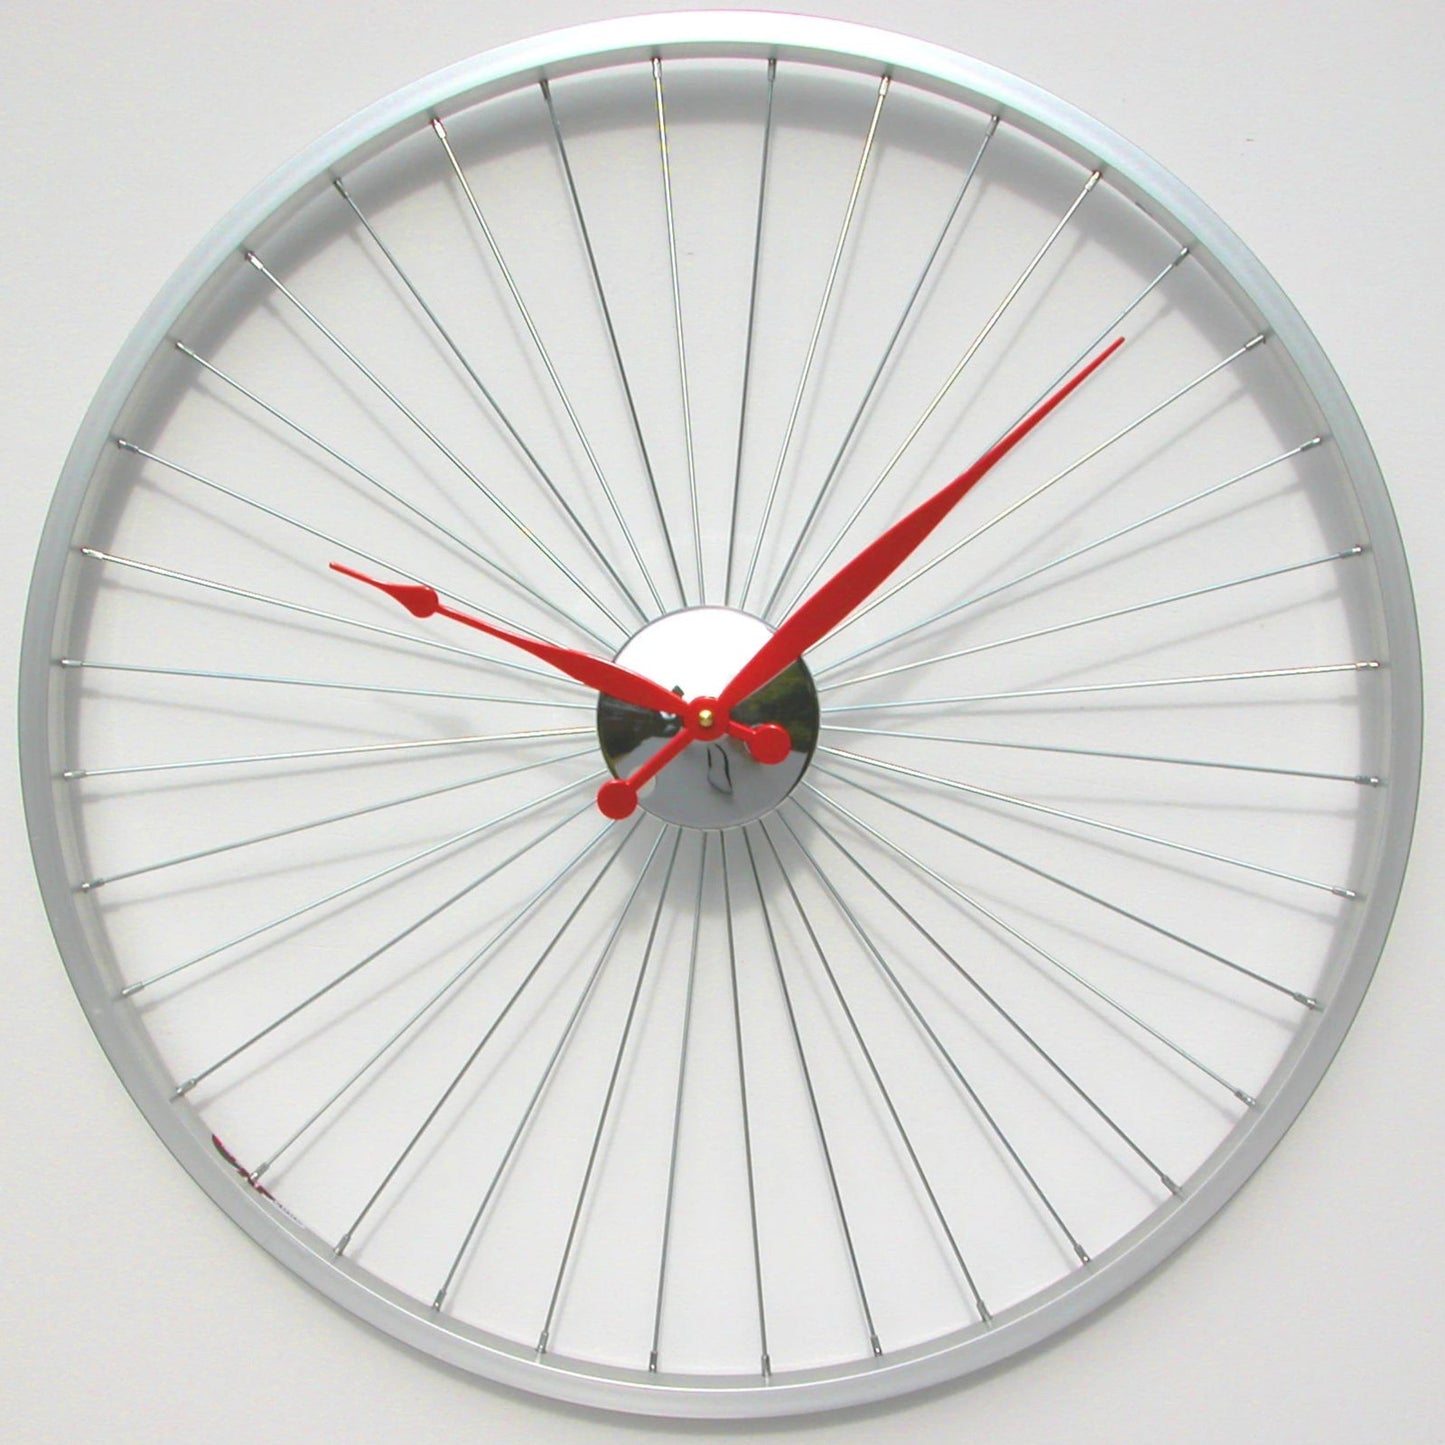 Bike wheel clock 23 inches Red Hands